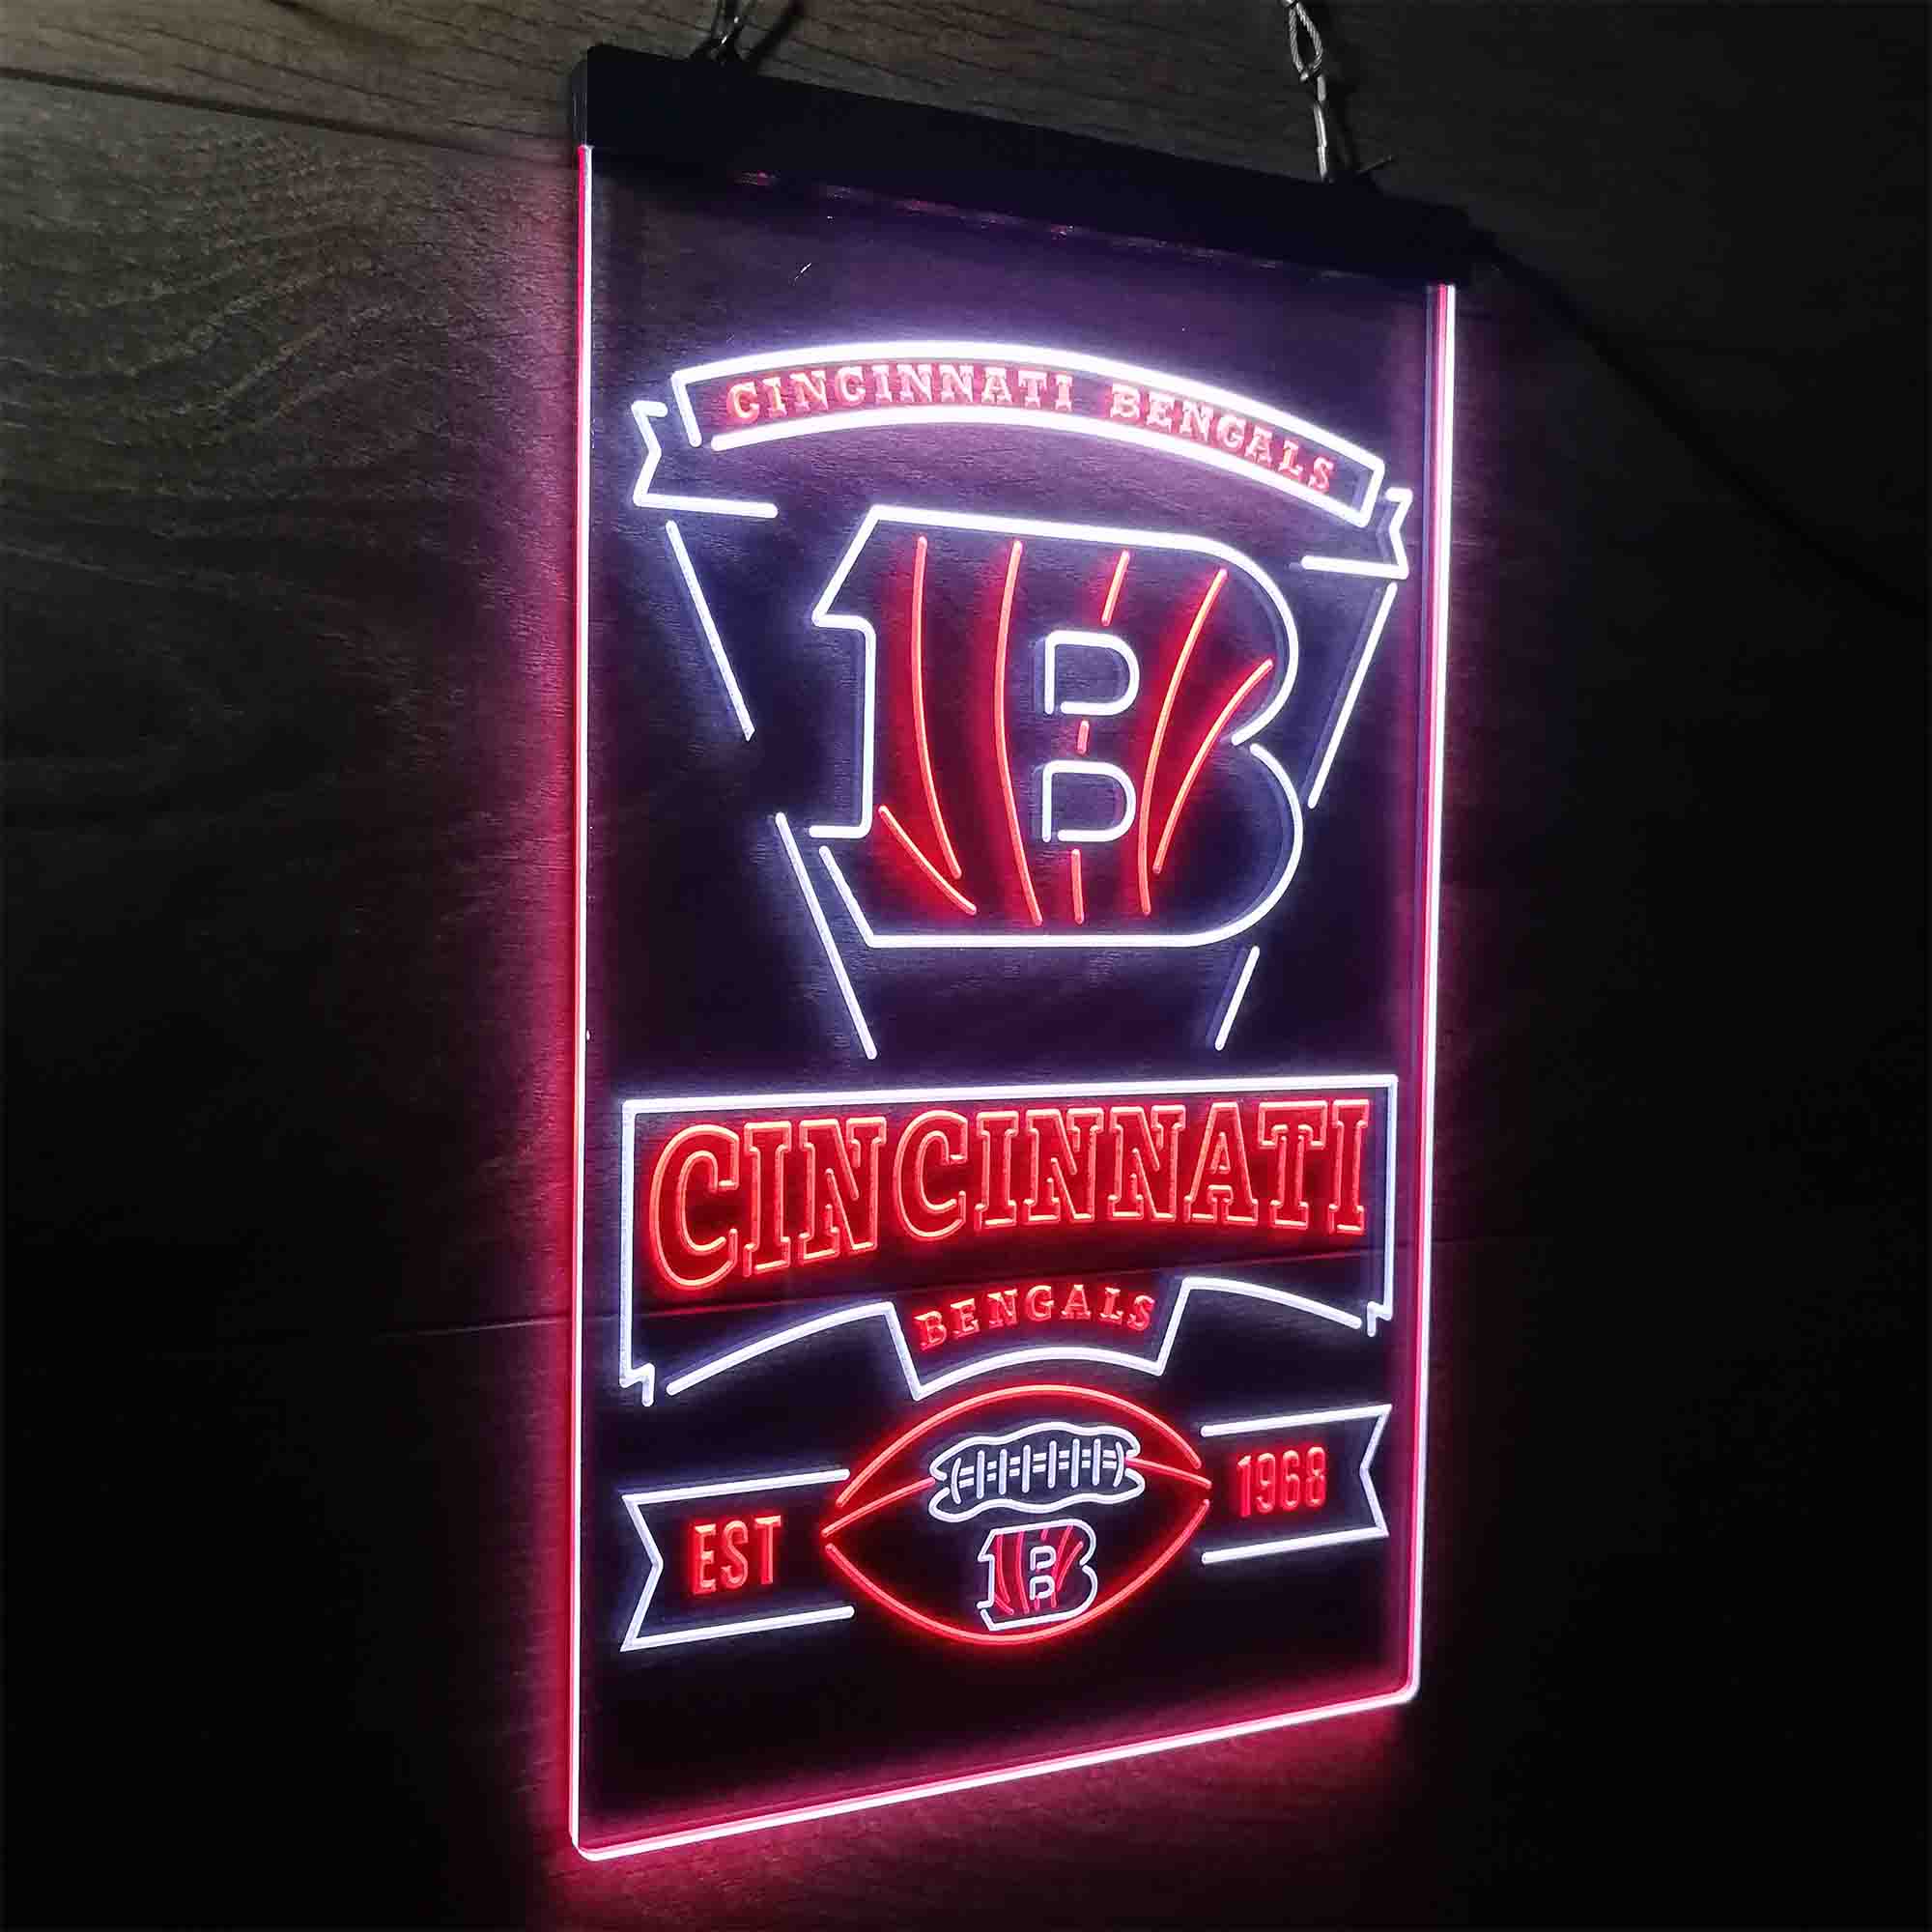 Cincinnati Bengals Est. 1968 Neon-Like LED Sign